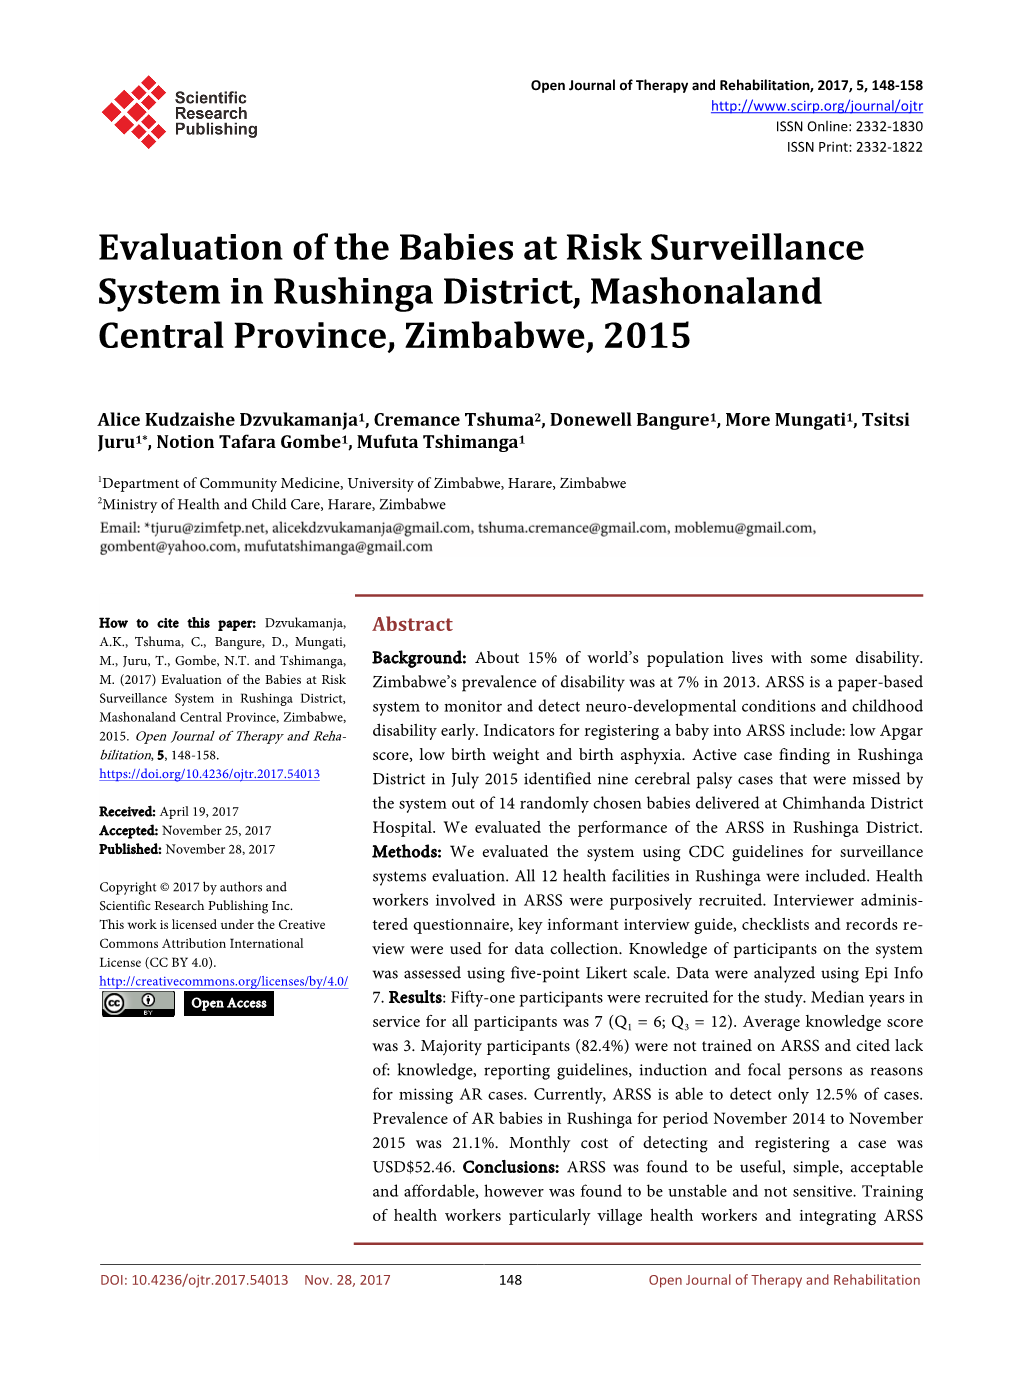 Evaluation of the Babies at Risk Surveillance System in Rushinga District, Mashonaland Central Province, Zimbabwe, 2015